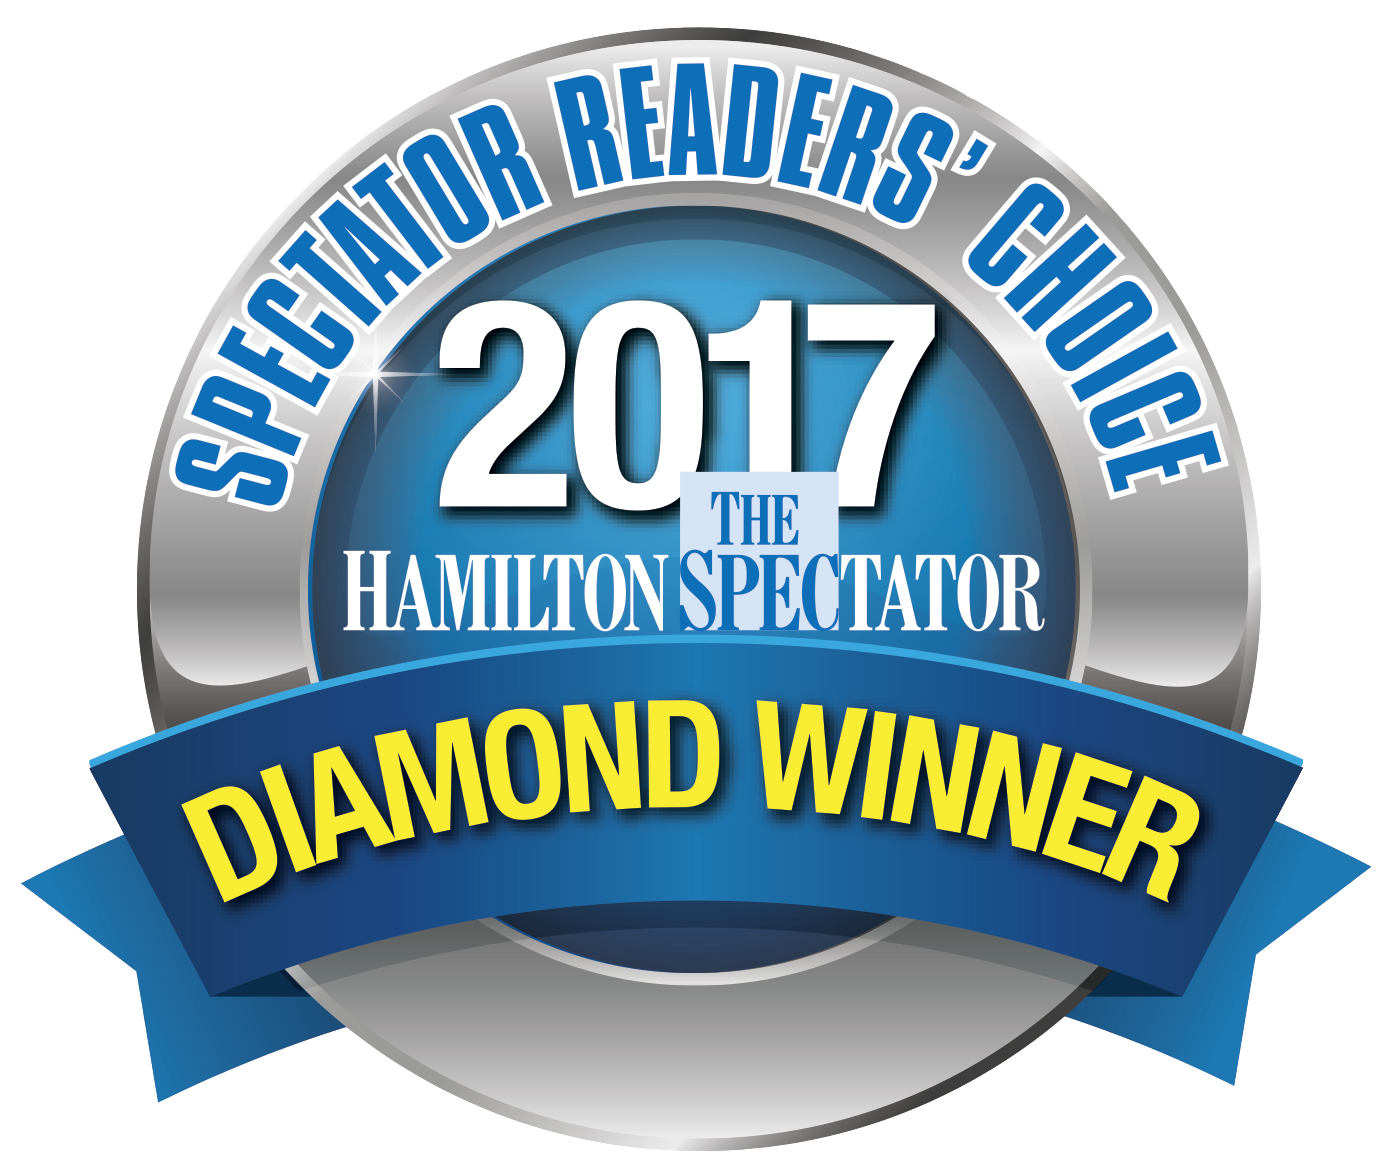 RC diamond winner 2017 logo